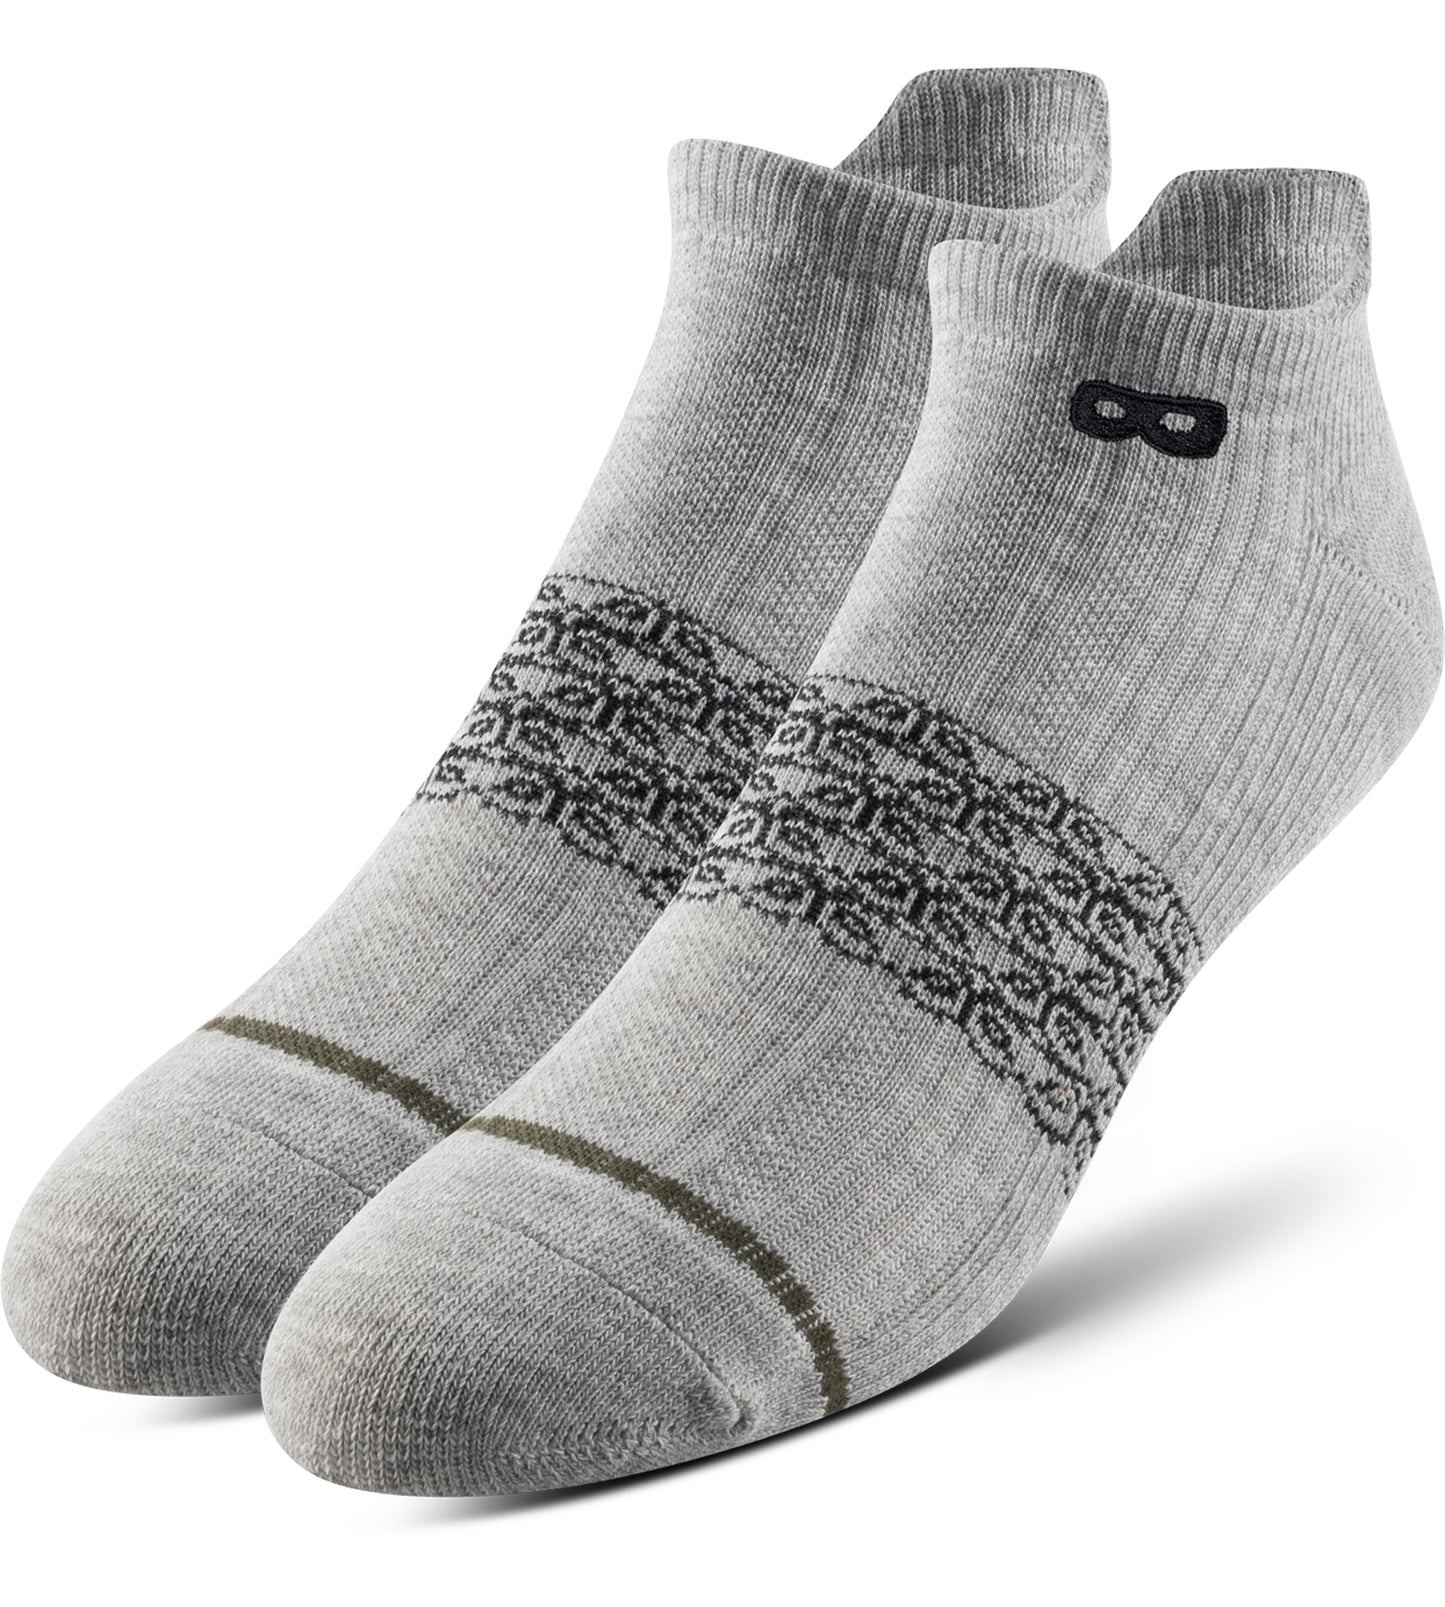 Men’s Cushion Low Cut Socks, gray